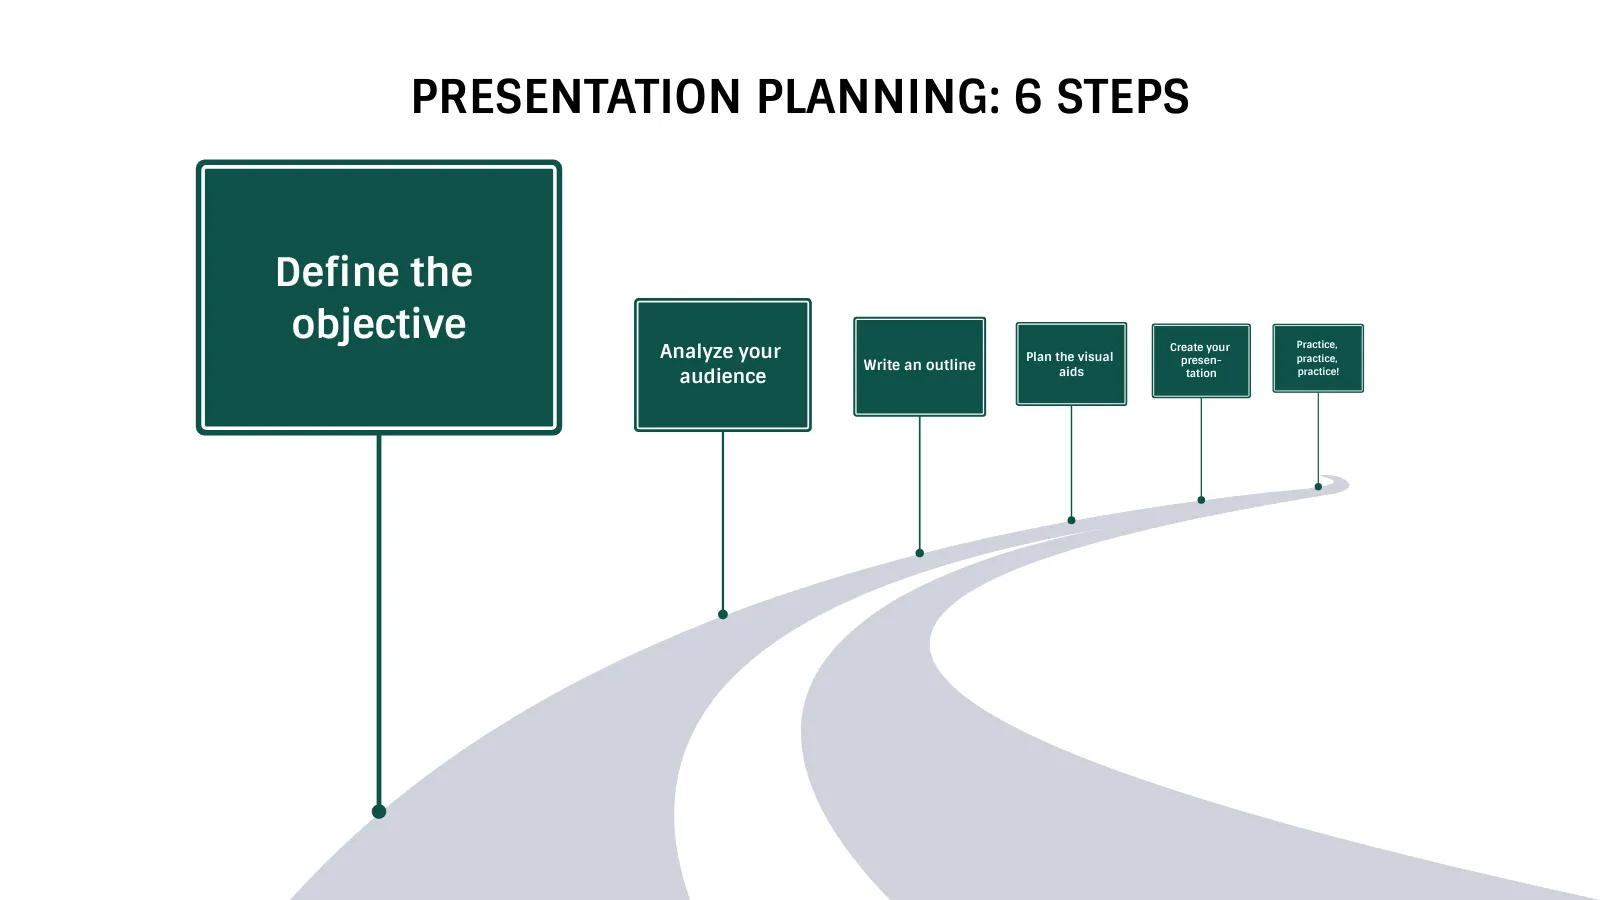 Roadmap example: PRESENTATION PLANNING: 6 STEPS